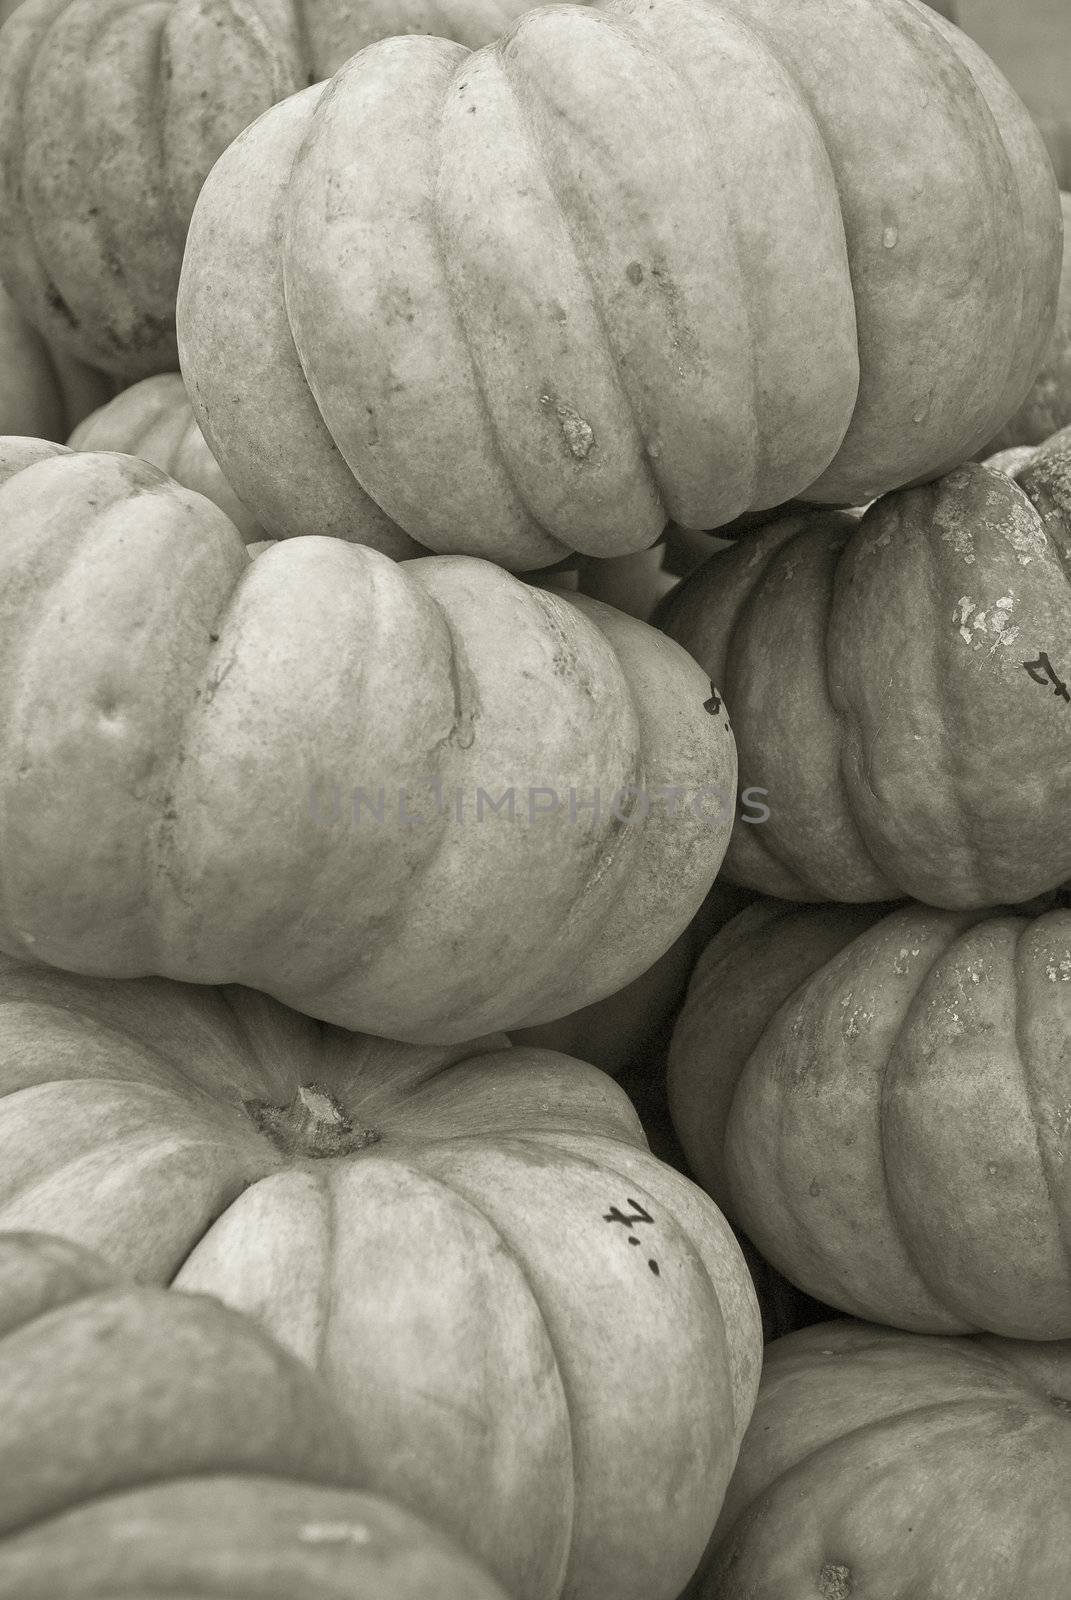 pumpkins by laengauer